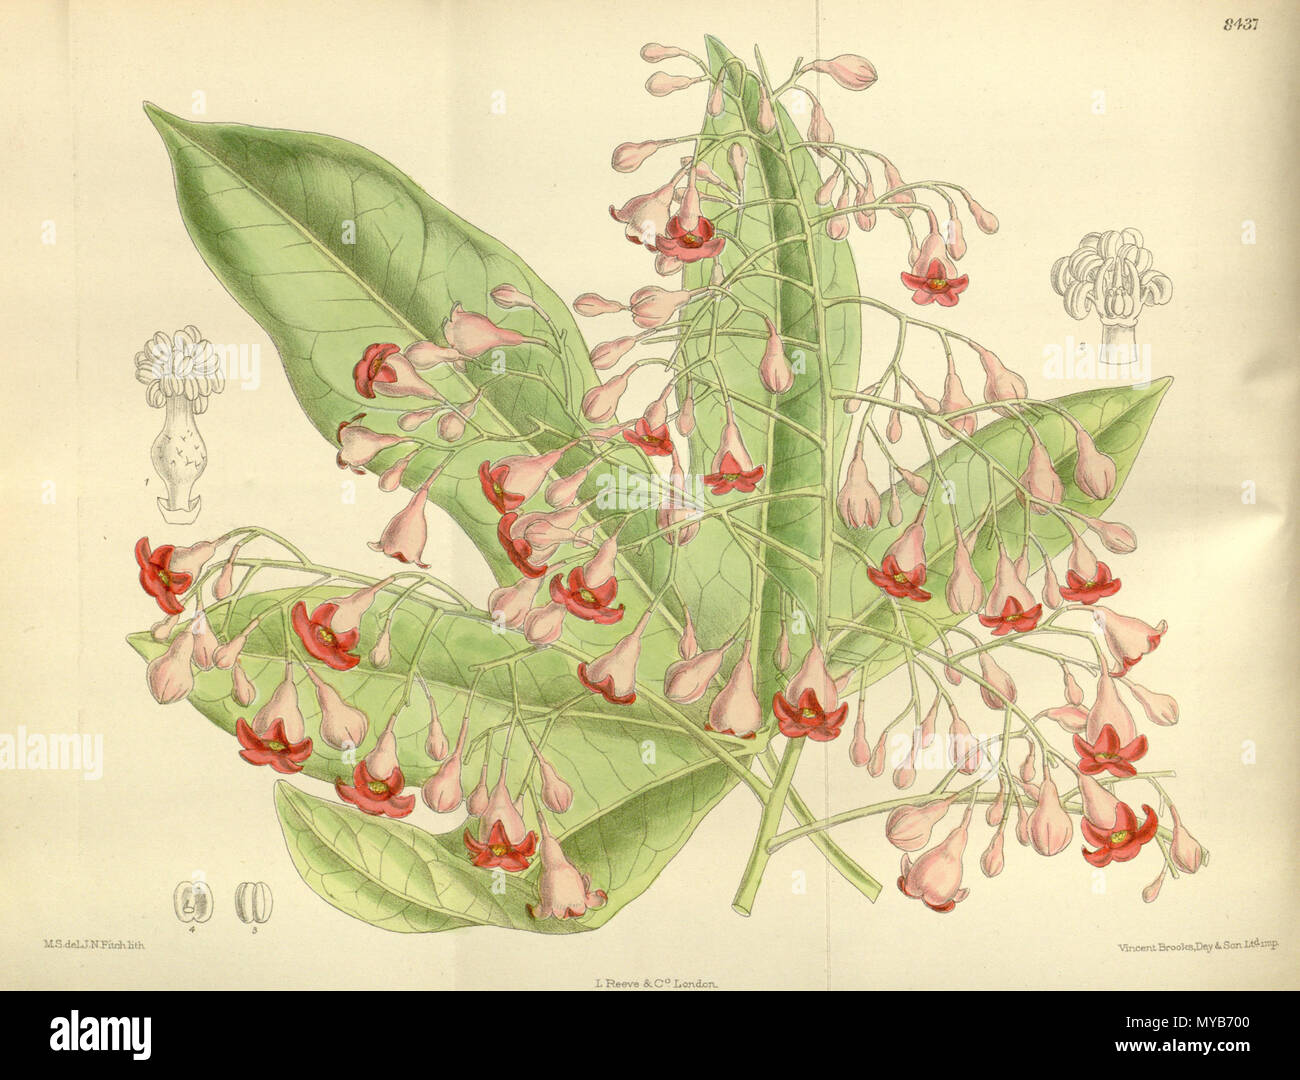 . Brachychiton acerifolius, Malvaceae, Sterculioideae . 1912. M.S. del, J.N.Fitch, lith. 84 Brachychiton acerifolius 138-8437 Stock Photo